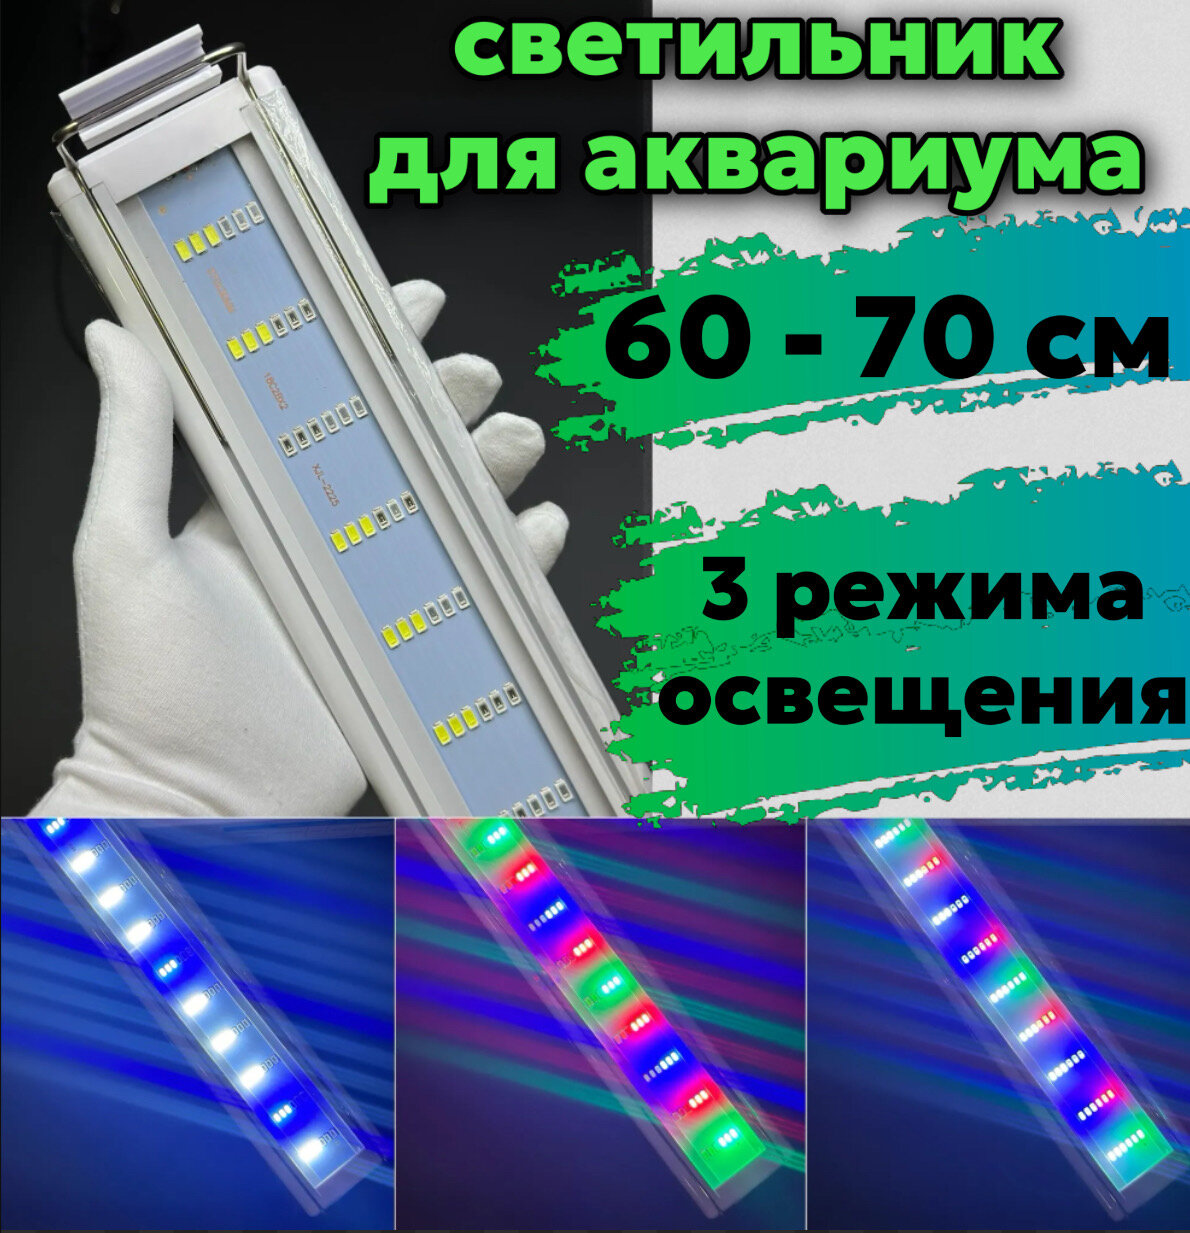 YR - 60 LED WRGB (от 60 см до 70 см) / 3 режима освещения / подсветка для аквариума